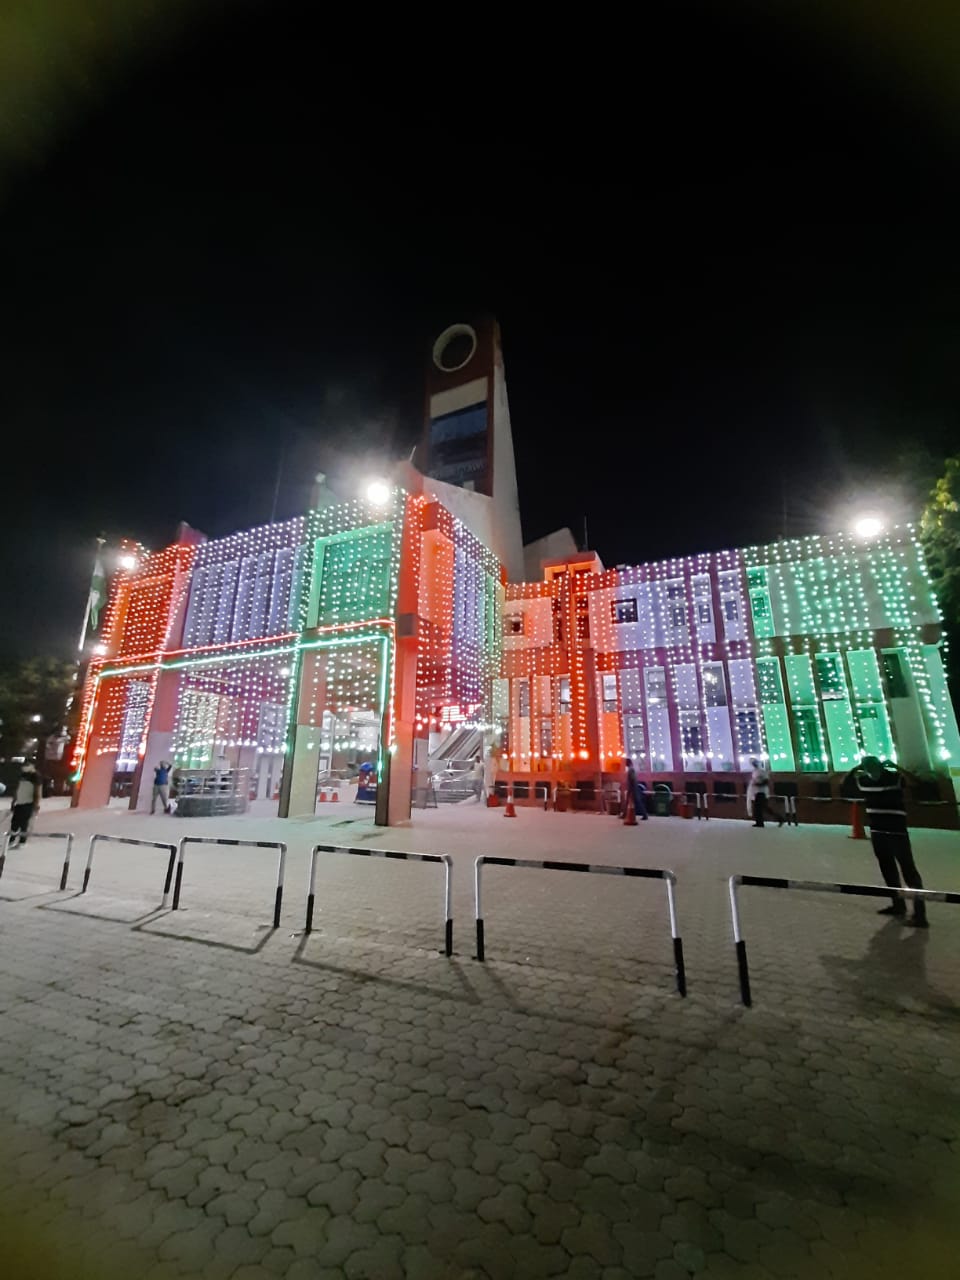 jammu railway station in tricolor (photo satnam singh twitter)